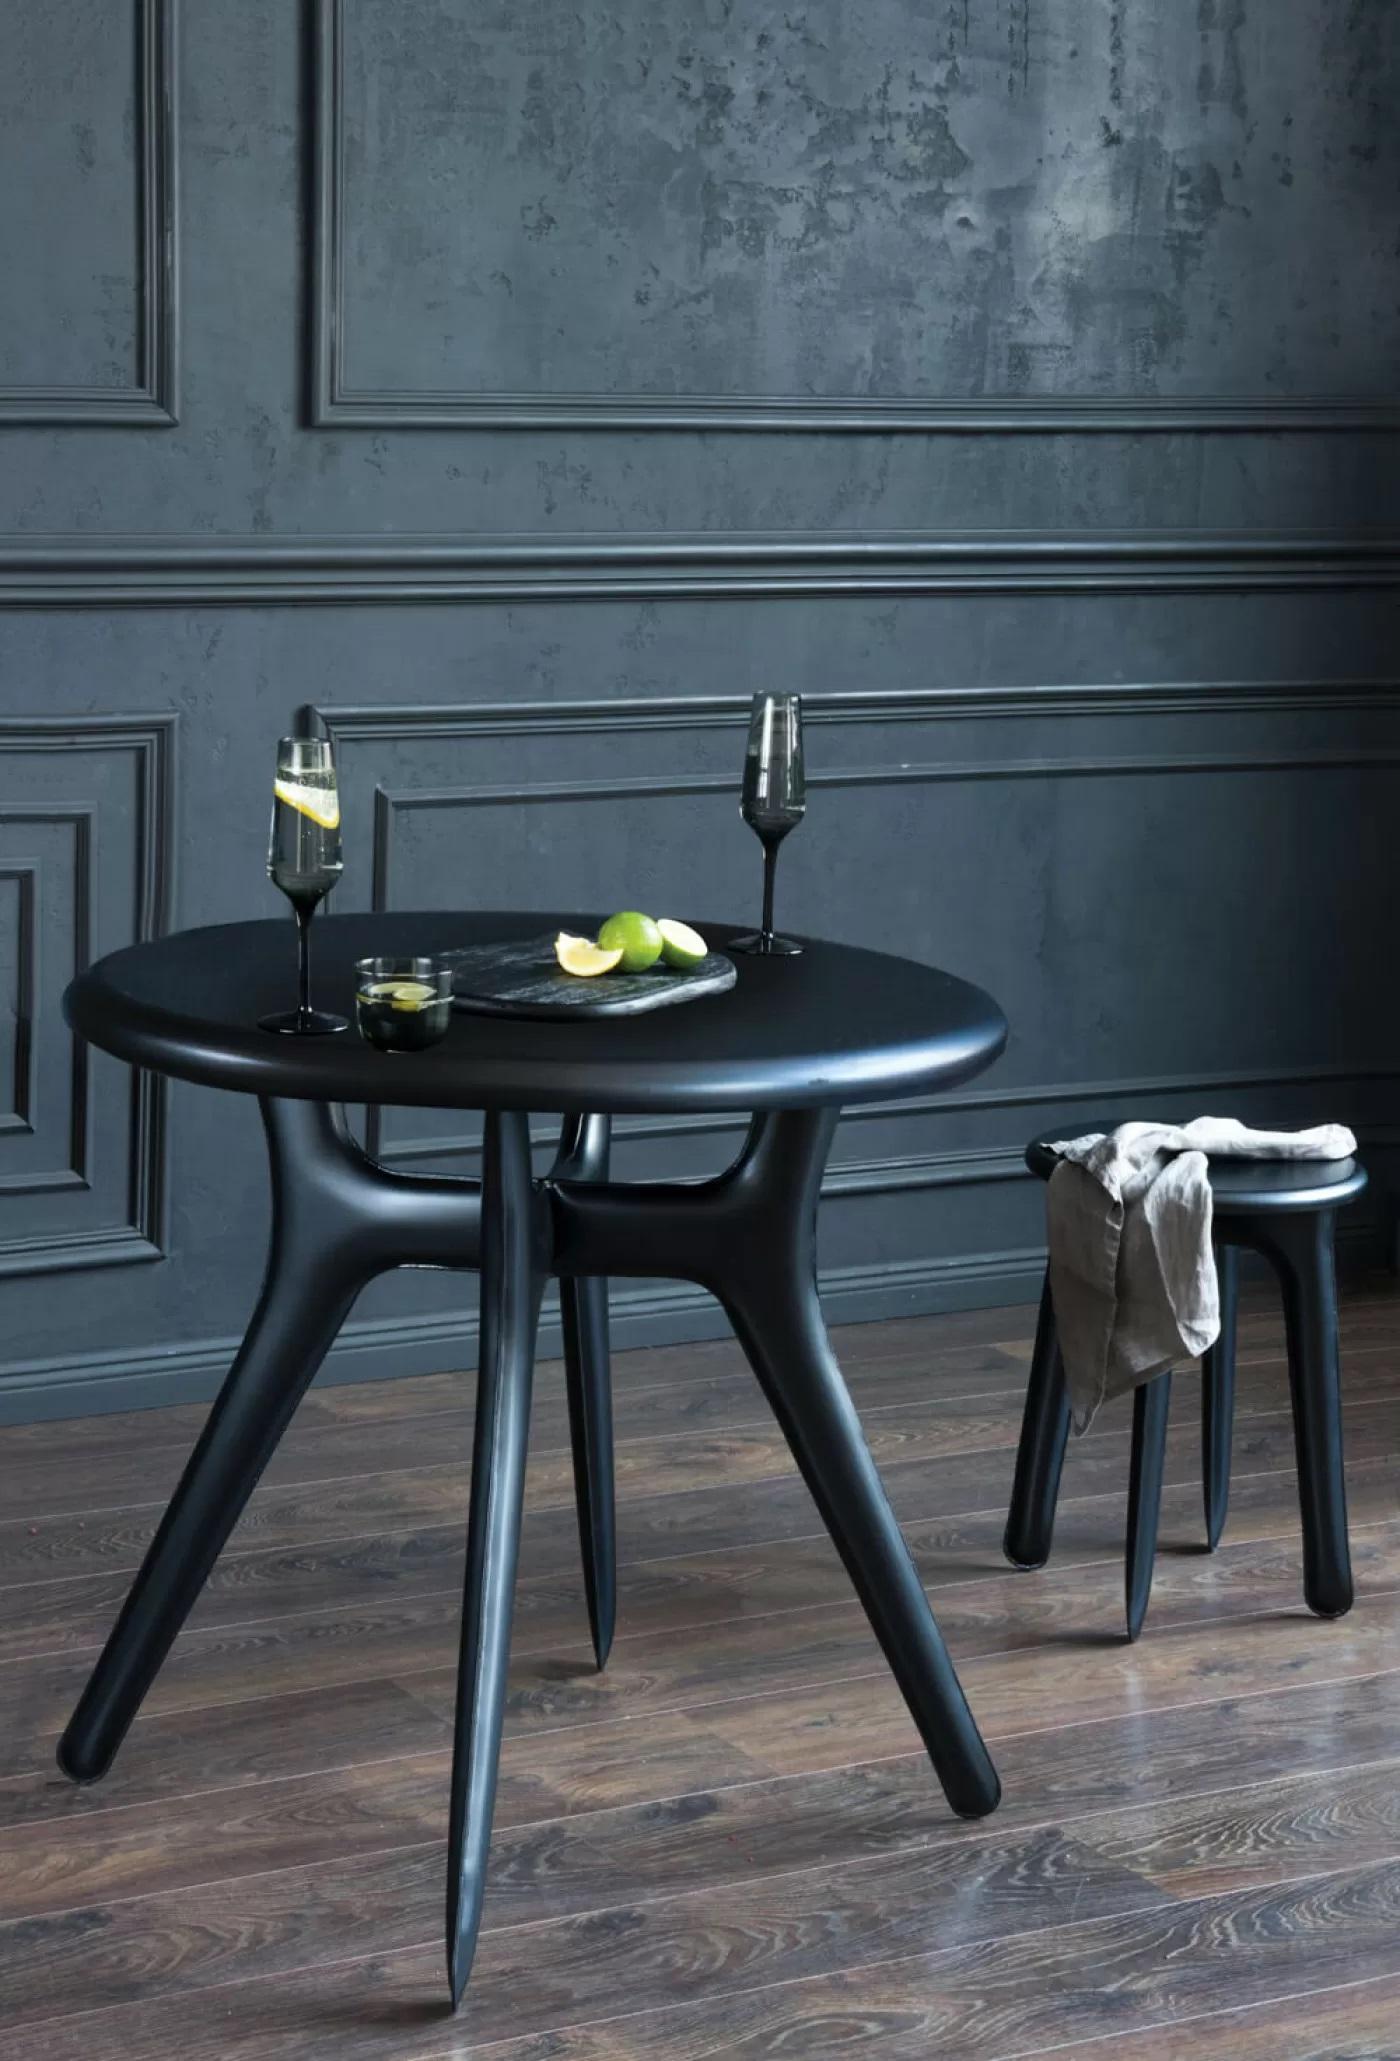 Ultraleggera Coffee Table Table by Zieta
Dimensions: Ø 80 x H 73 cm.
Materials: Anodic black aluminum.

The ULTRALEGGERA TABLE is a continuation of the ultralightness narrative. Its regular size perfectly fits six ULTRALEGGERA chairs. The solution